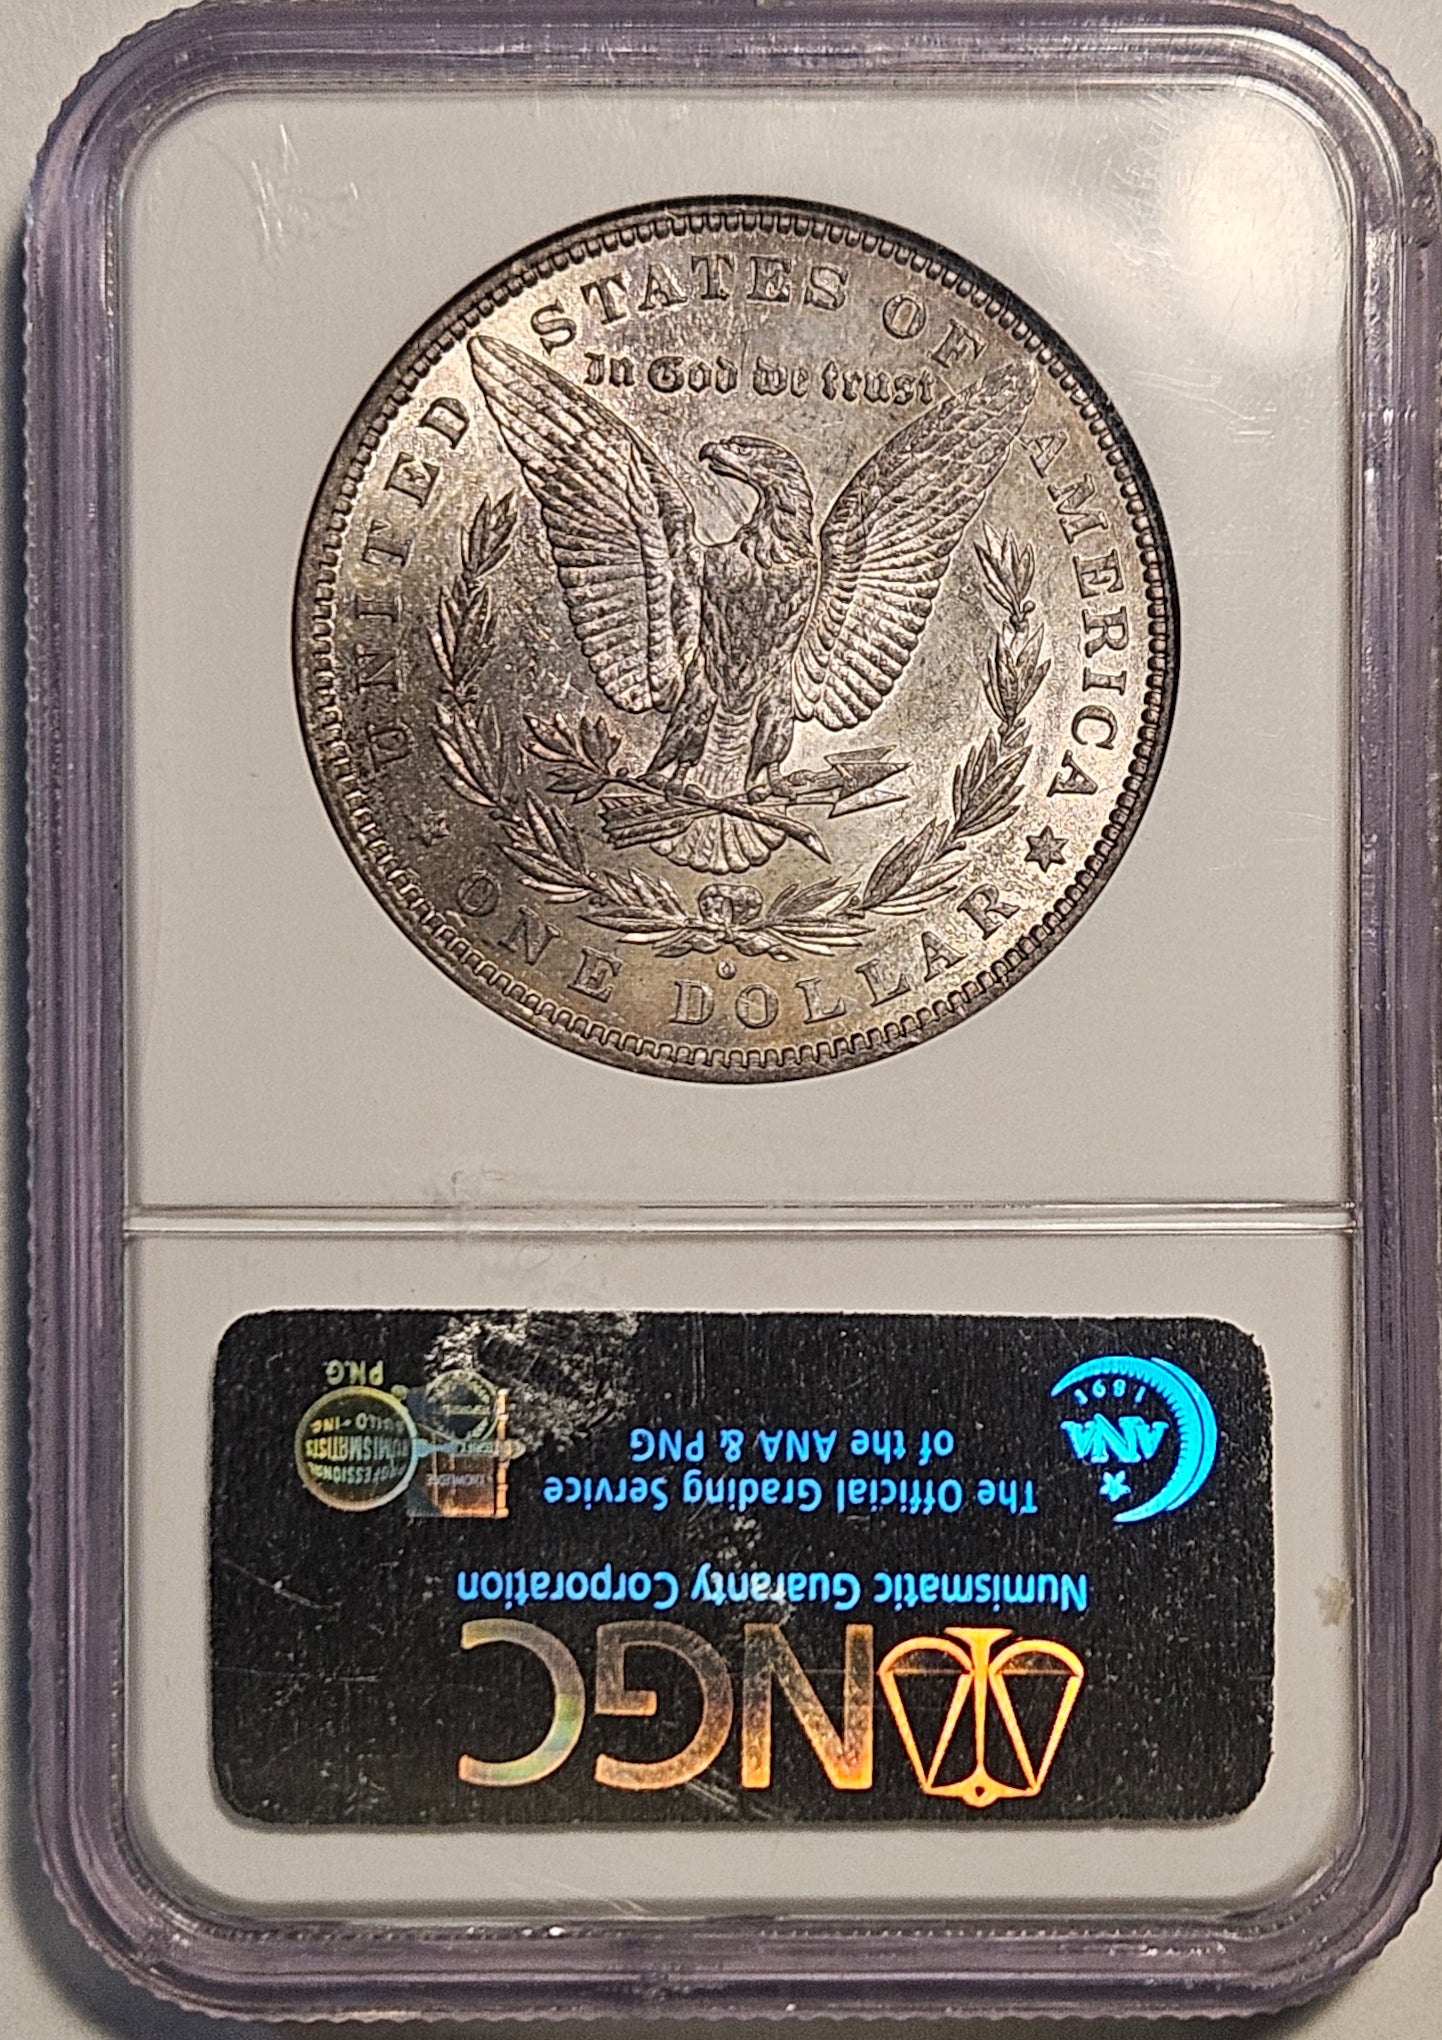 1880-O Morgan Silver Dollar NGC MS62